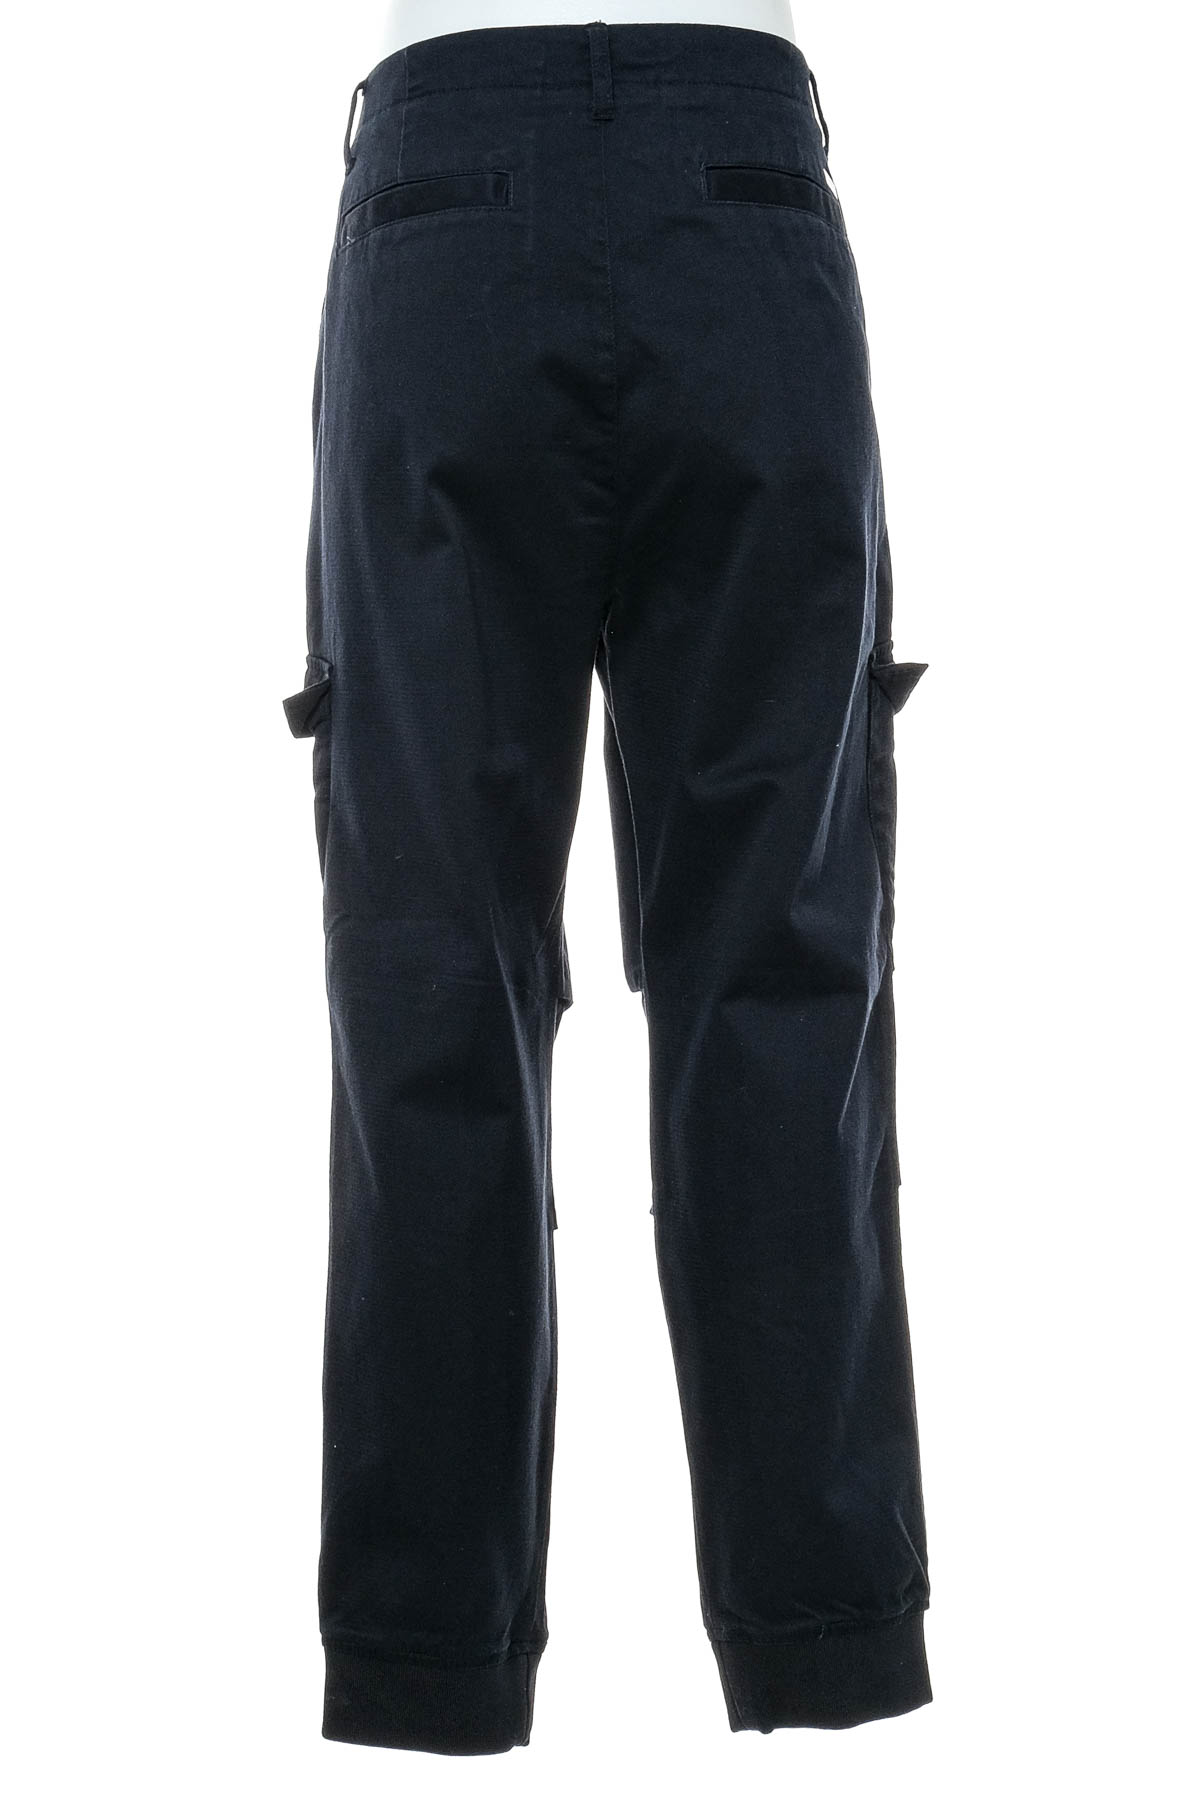 Pantalon pentru bărbați - Armani Exchange - 1